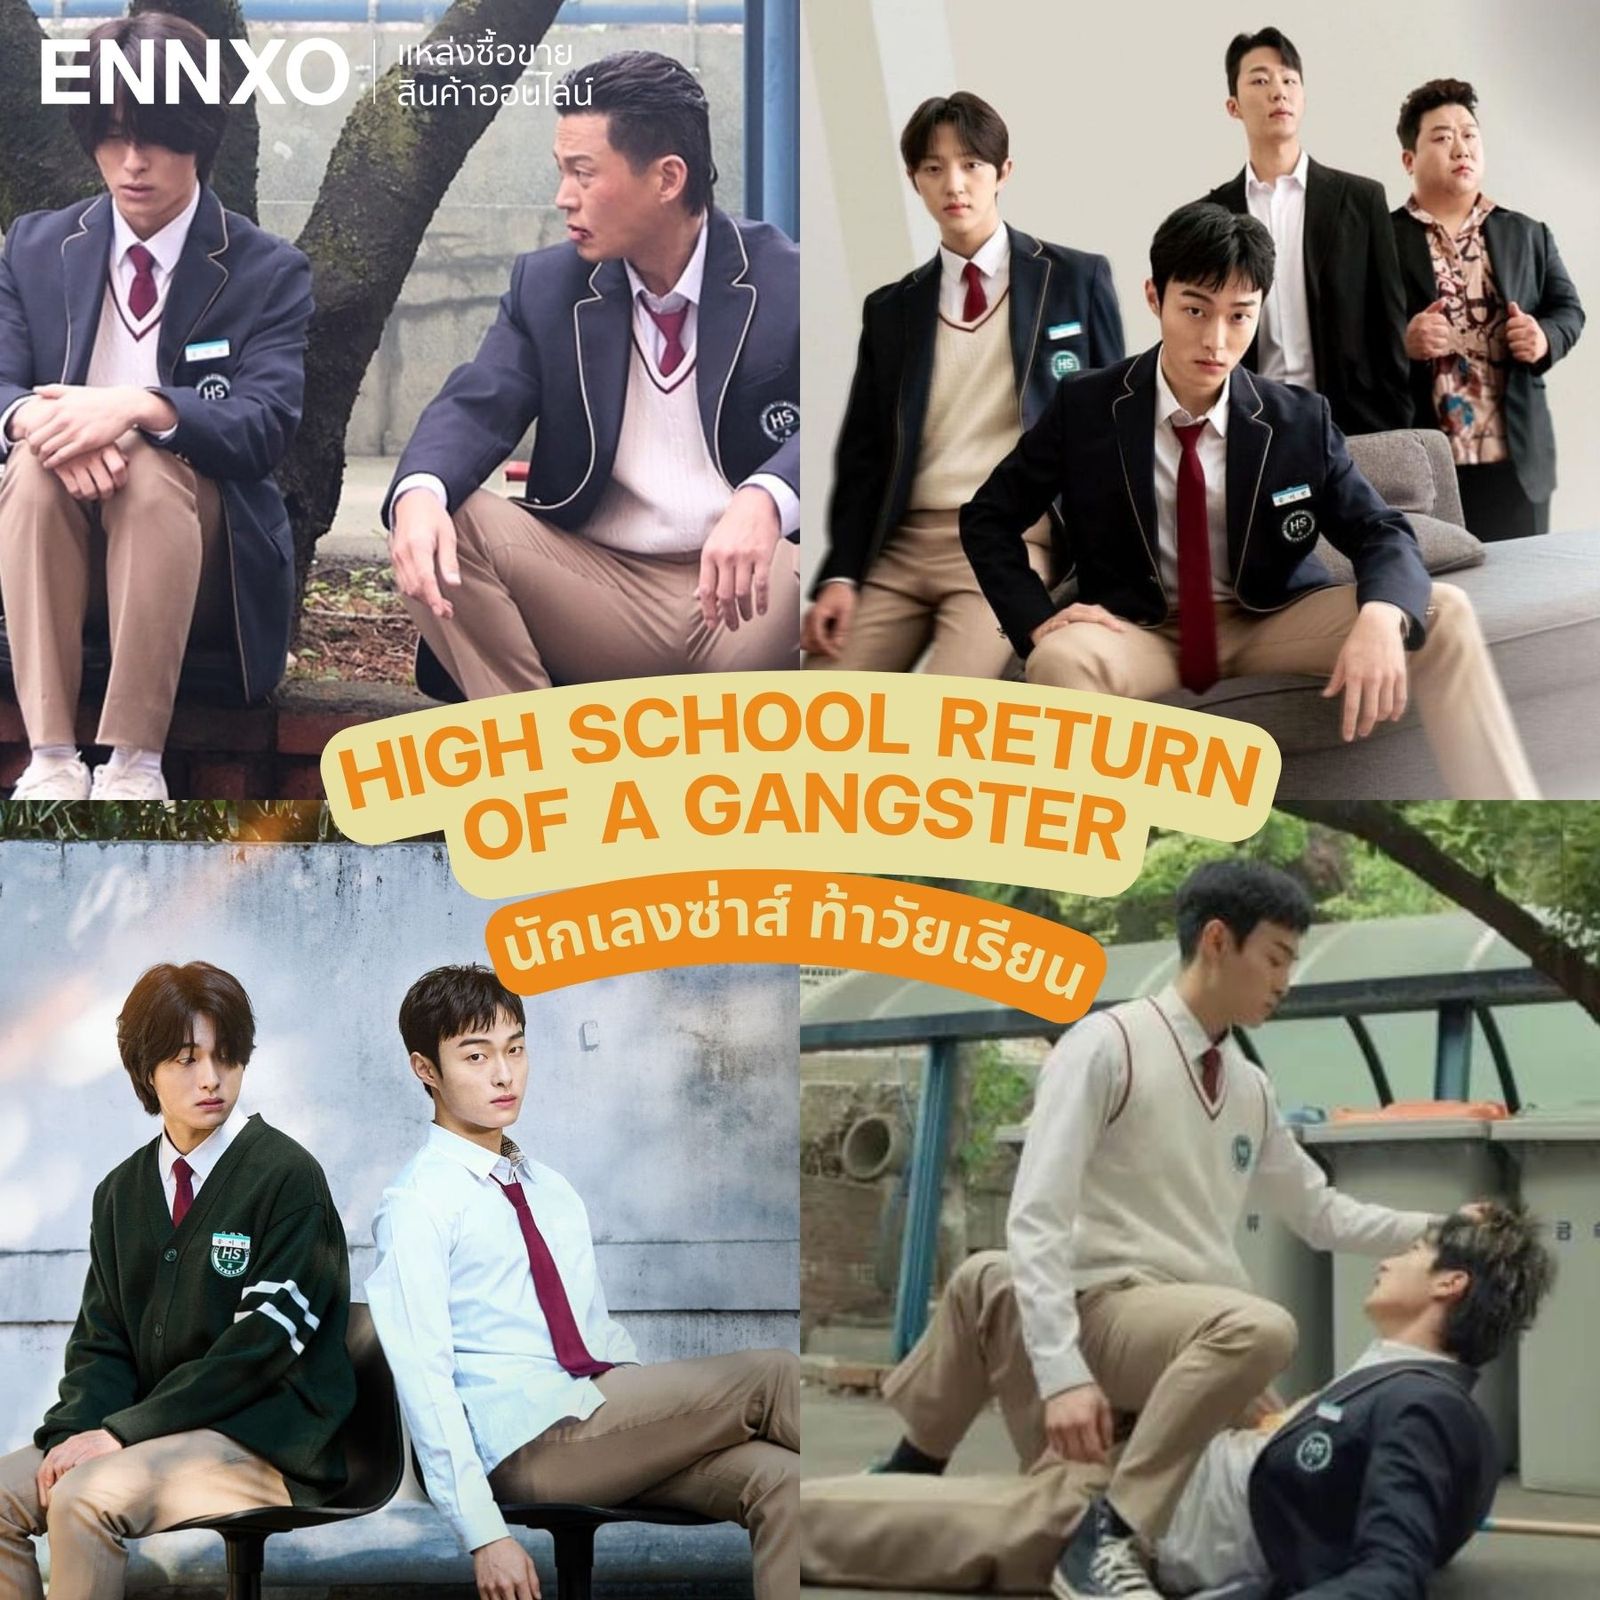 High School Return of a Gangster นักเลงซ่าส์ ท้าวัยเรียน ซีรีส์เกาหลีมาเฟียไปโรงเรียน